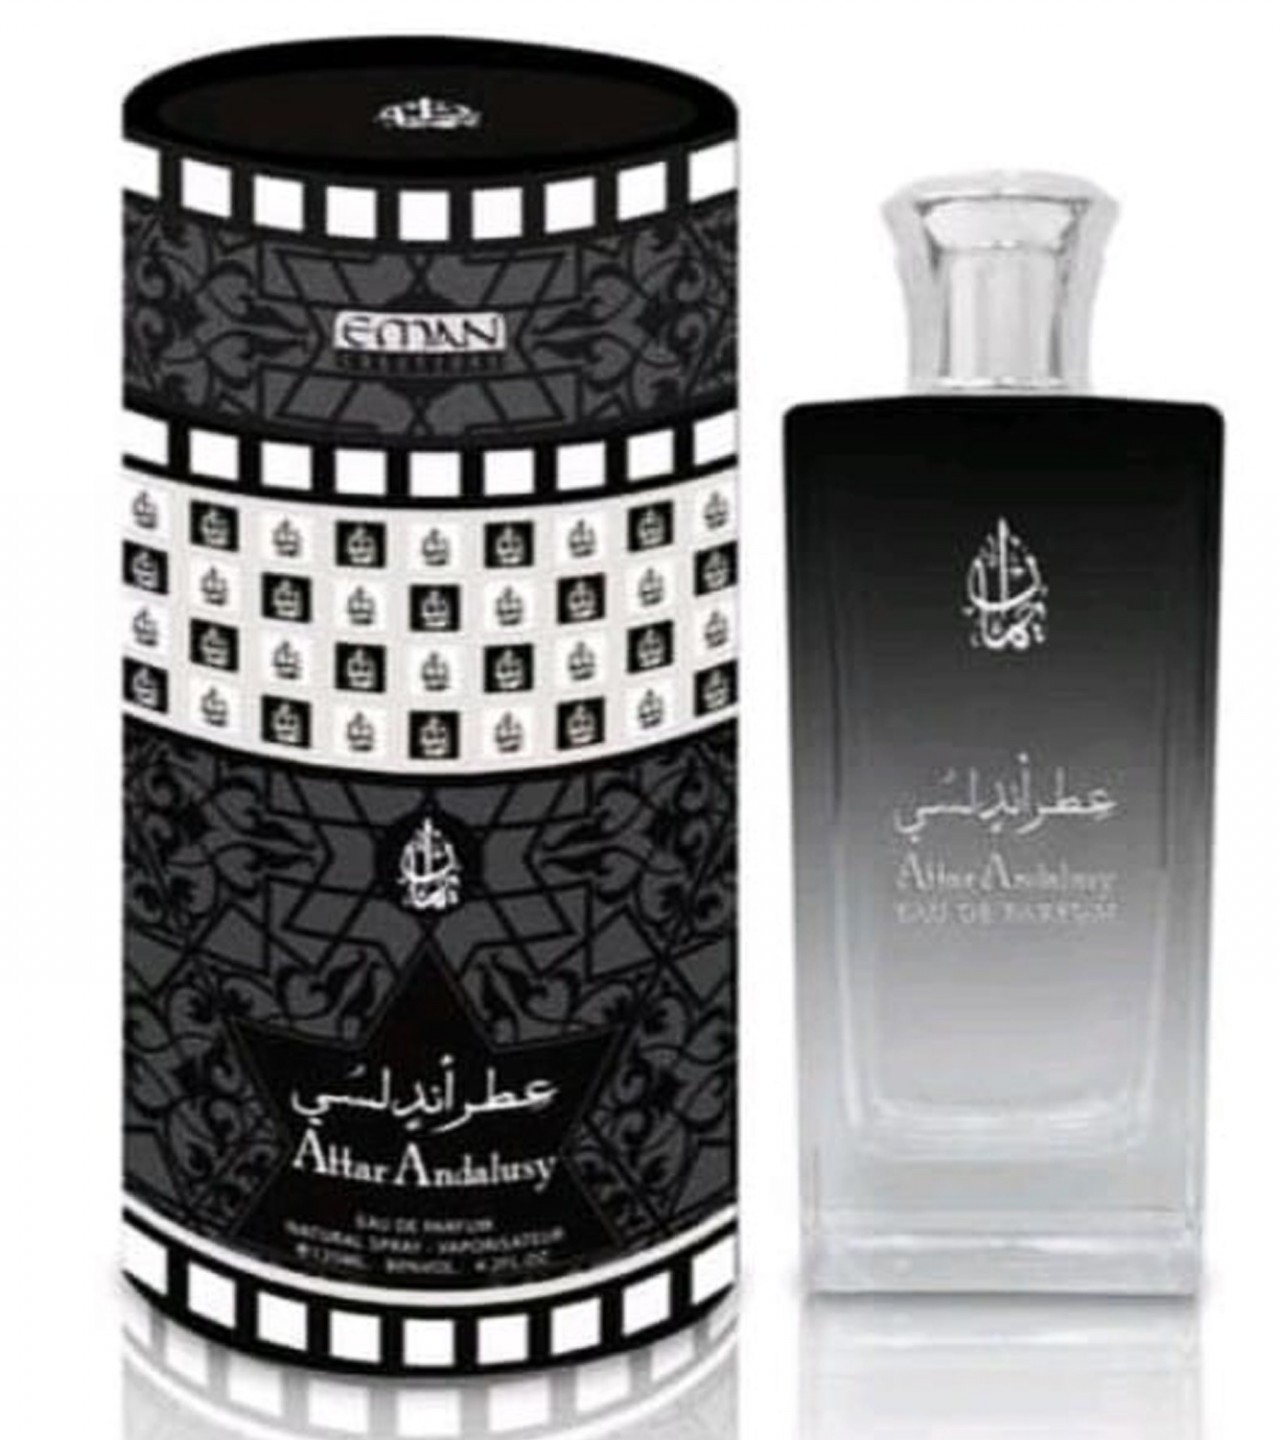 Eman Attar Andalusy Arabic Perfume For Unisex - 125 Ml - Black